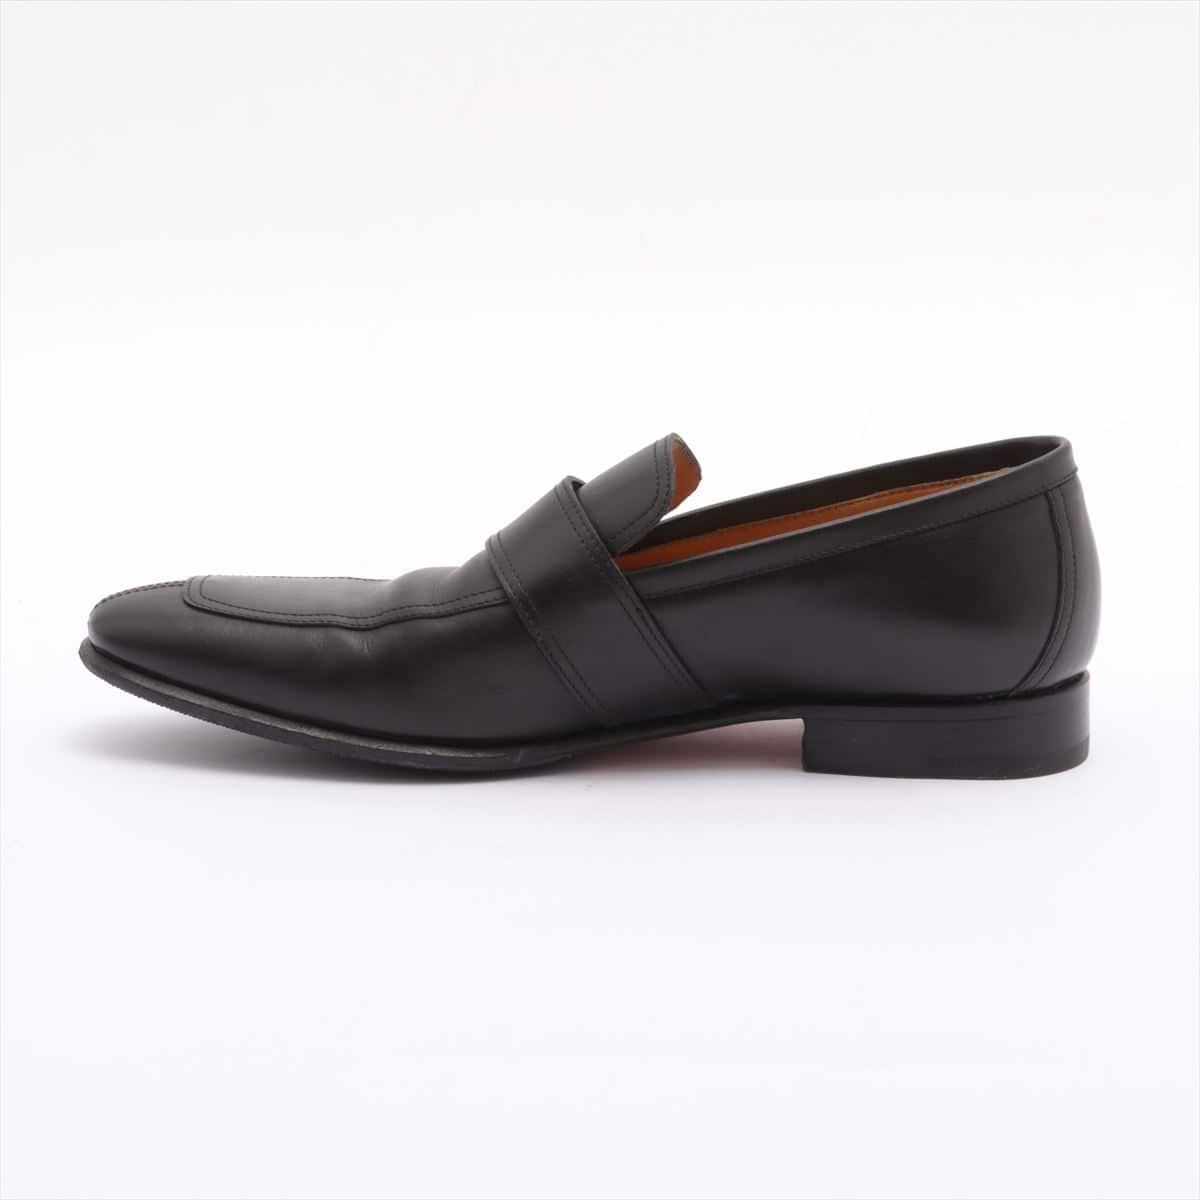 Hermès Leather Leather shoes 40 1/2 Men's Black Resoled